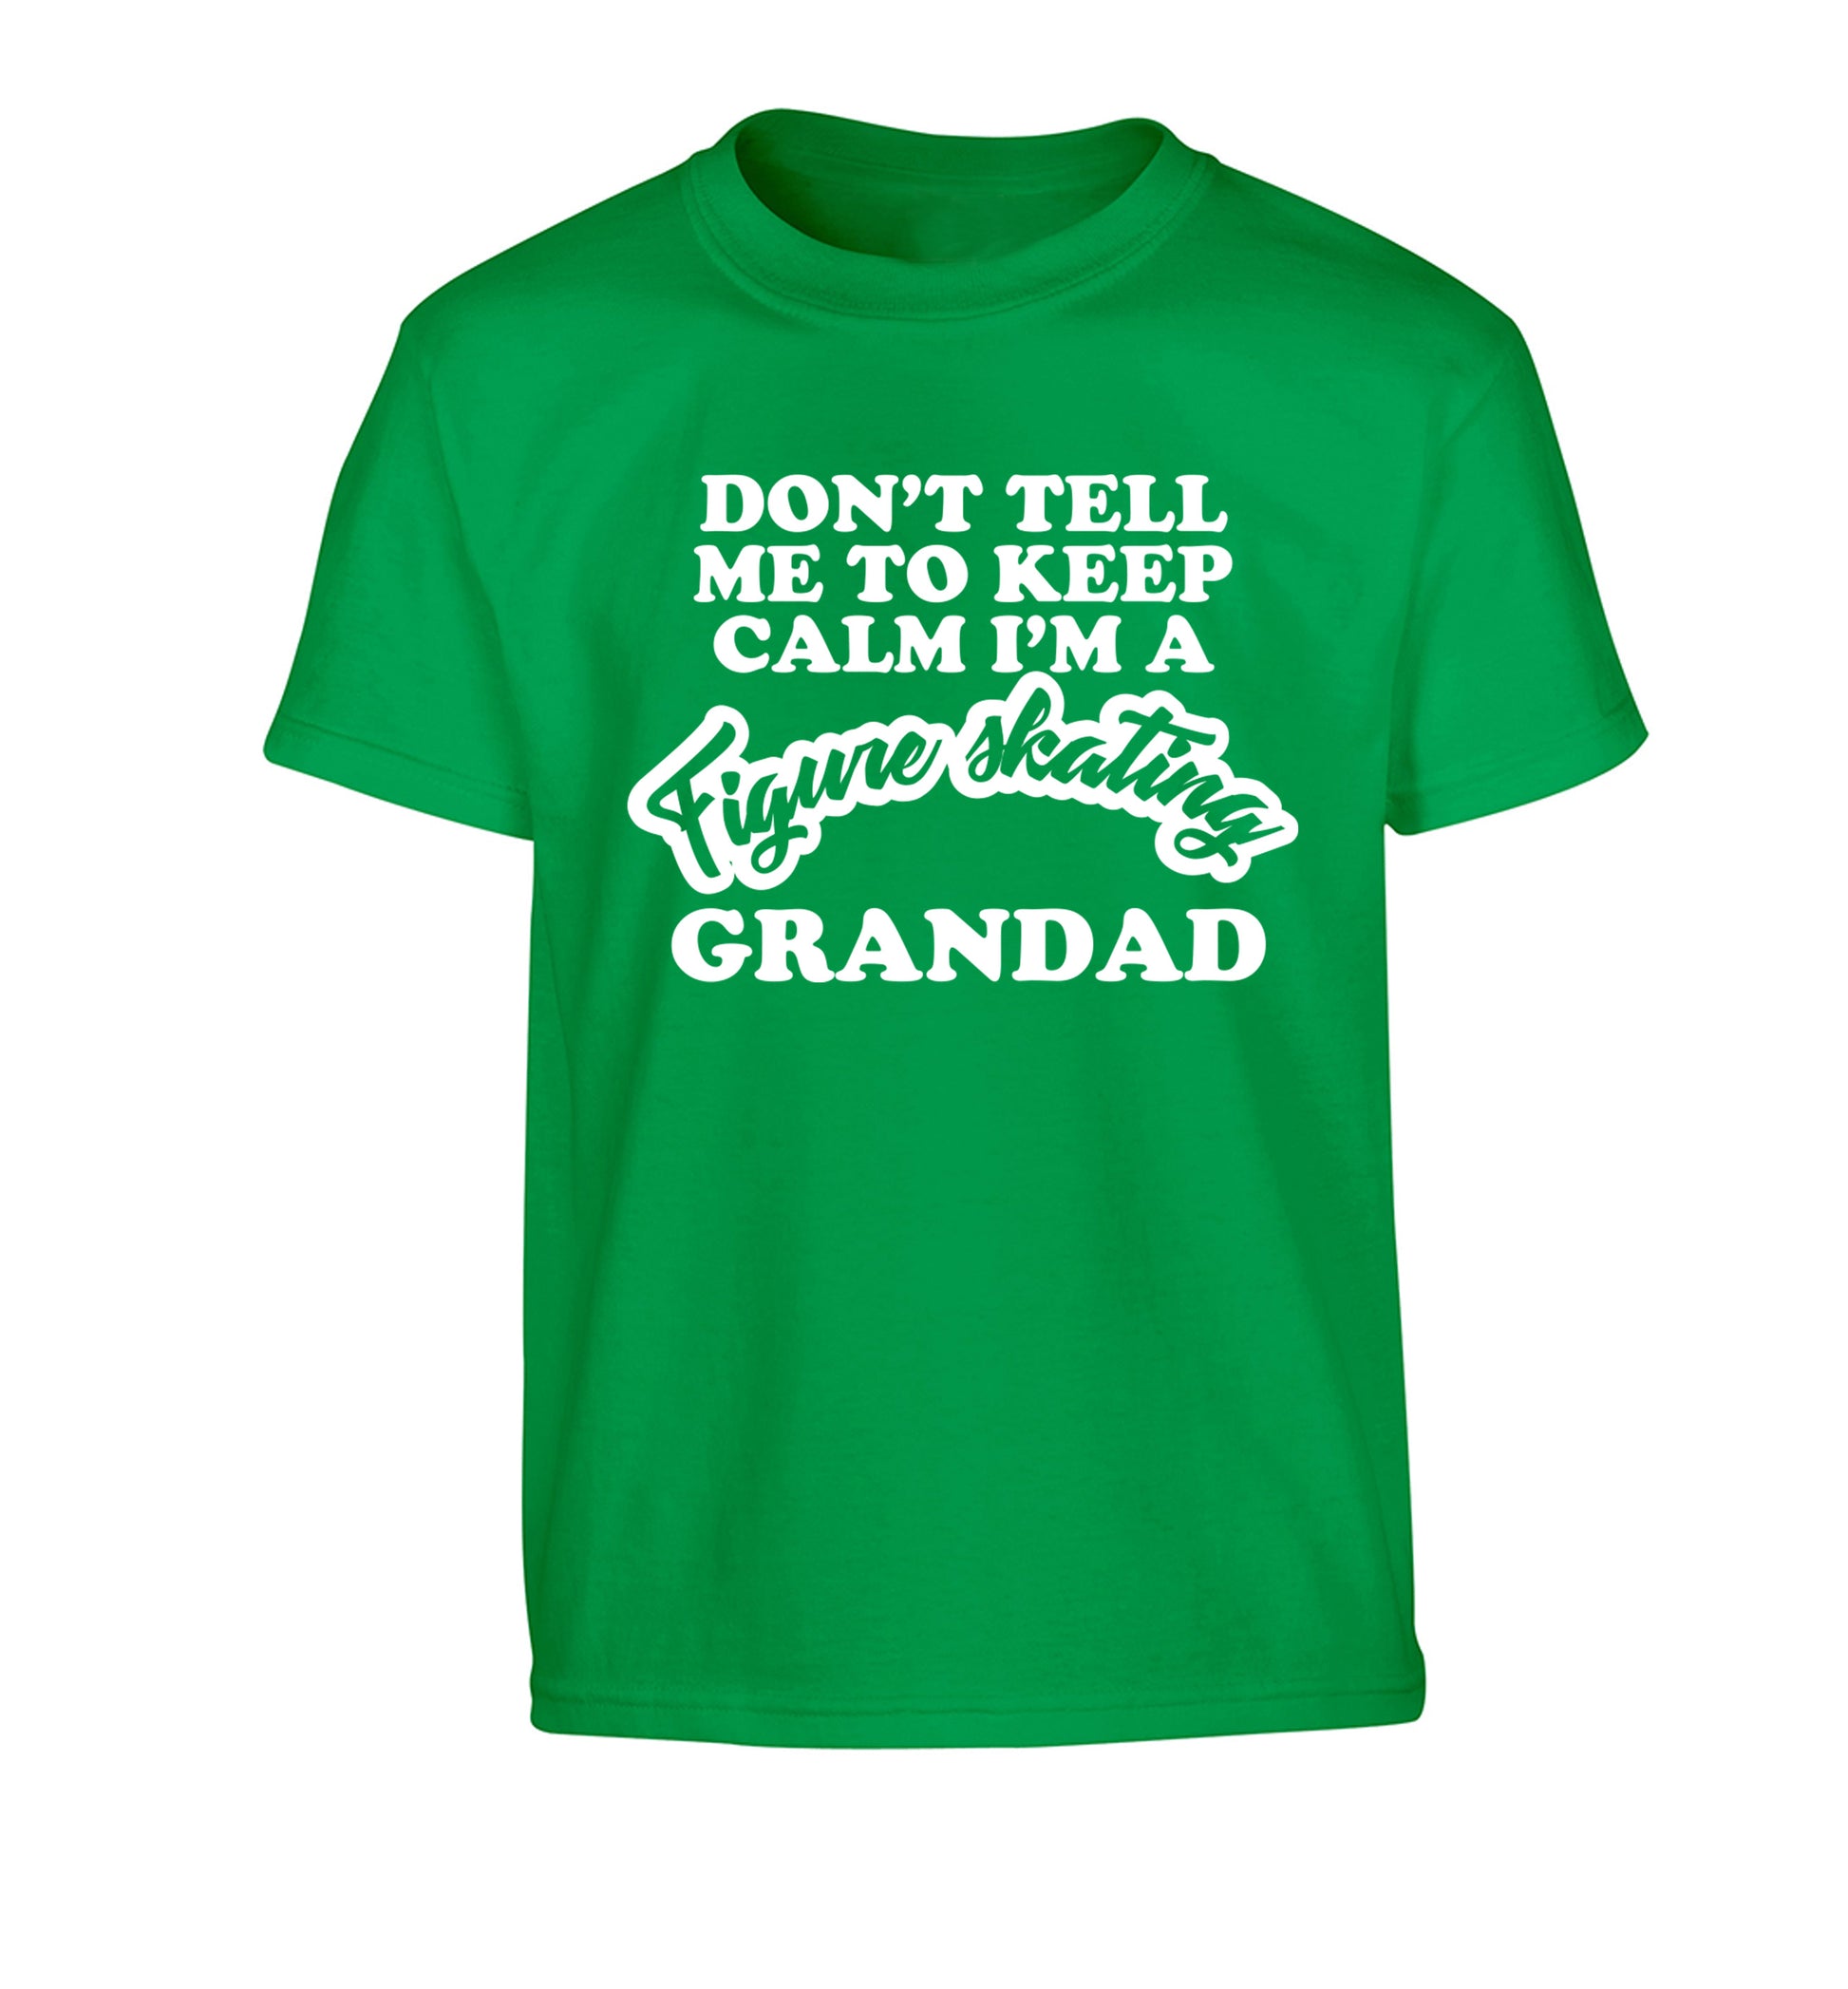 Don't tell me to keep calm I'm a figure skating grandad Children's green Tshirt 12-14 Years